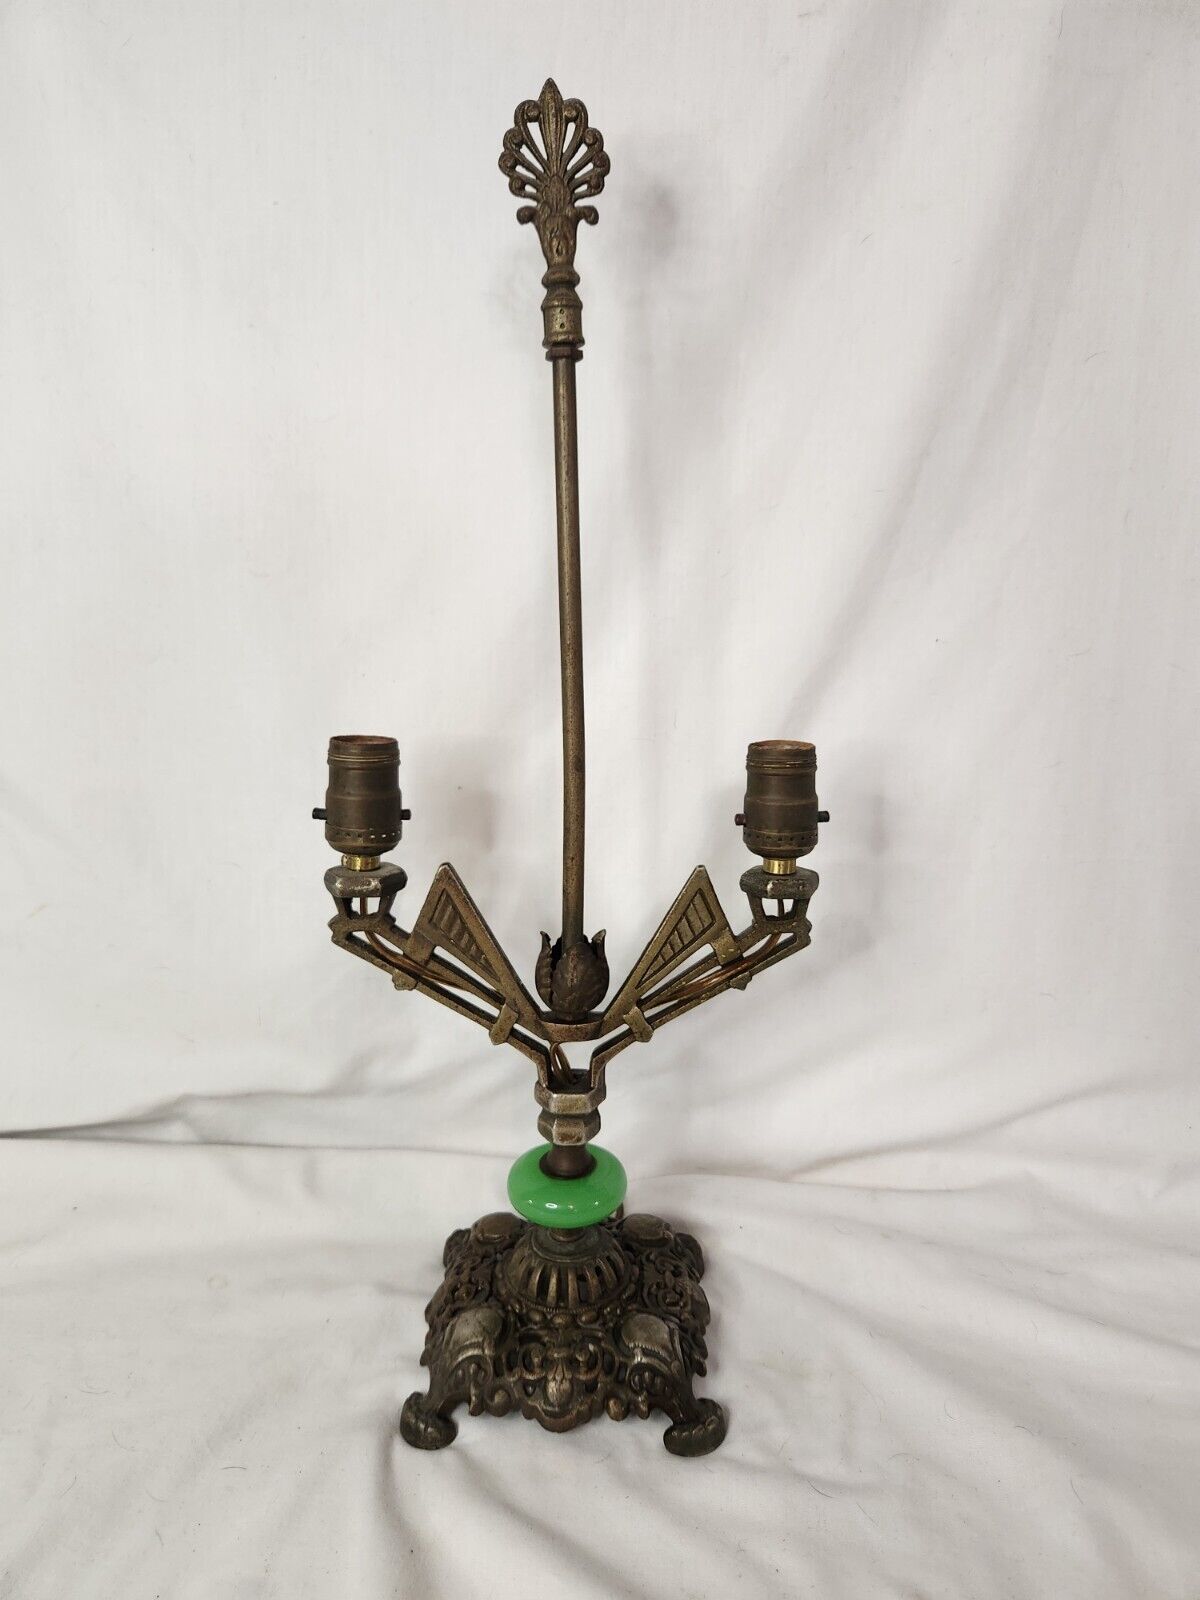 Vintage Art Deco Table Lamp with Geometric Design & Jadeite Glass Accent